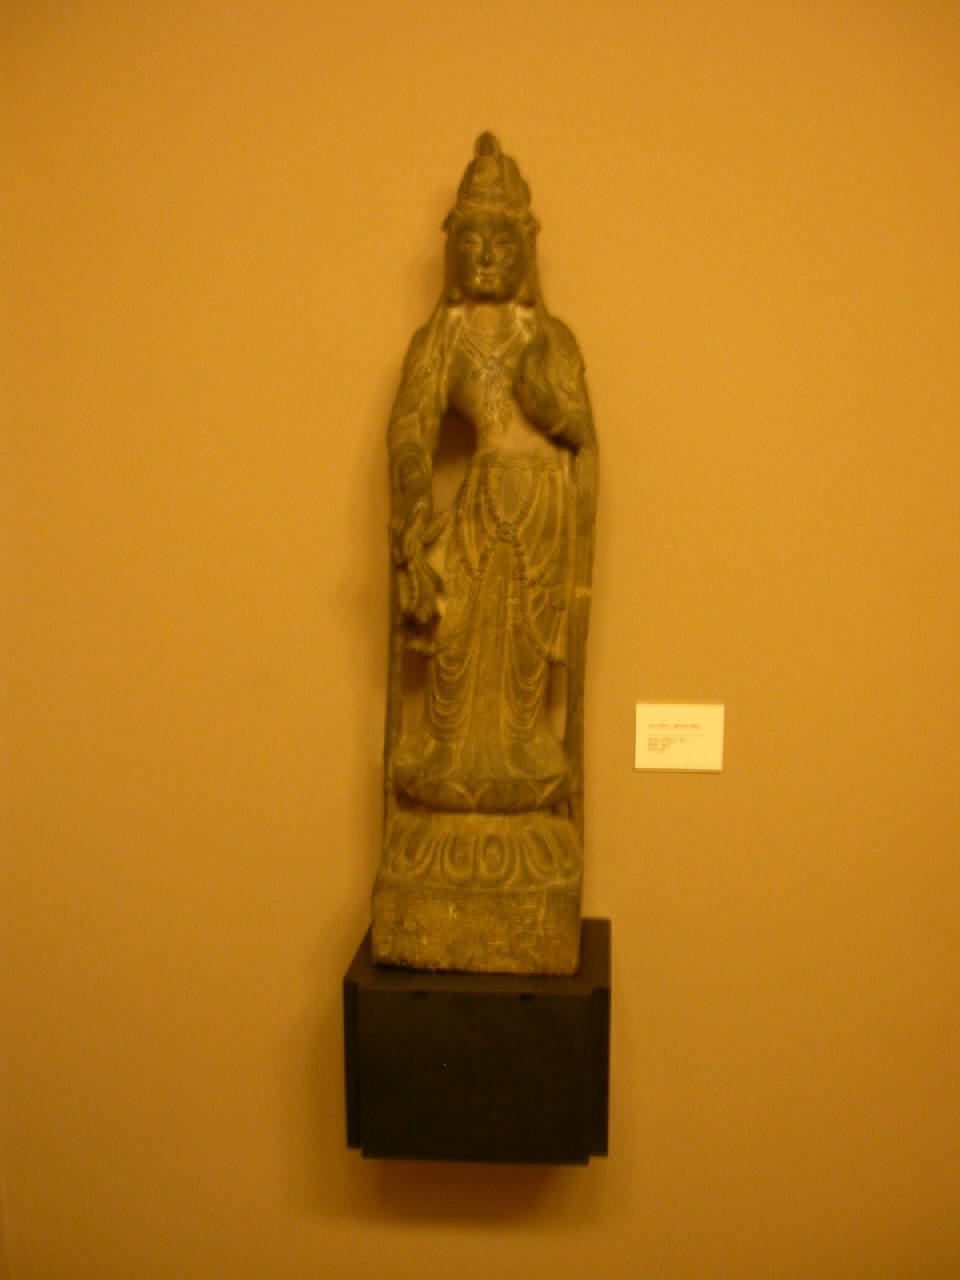 Guanyin, Statua raffigurante Guanyin eretto su un fiore di loto (statua devozionale) - manifattura cinese, dinastia Quing (secc. XIV/ XVII)